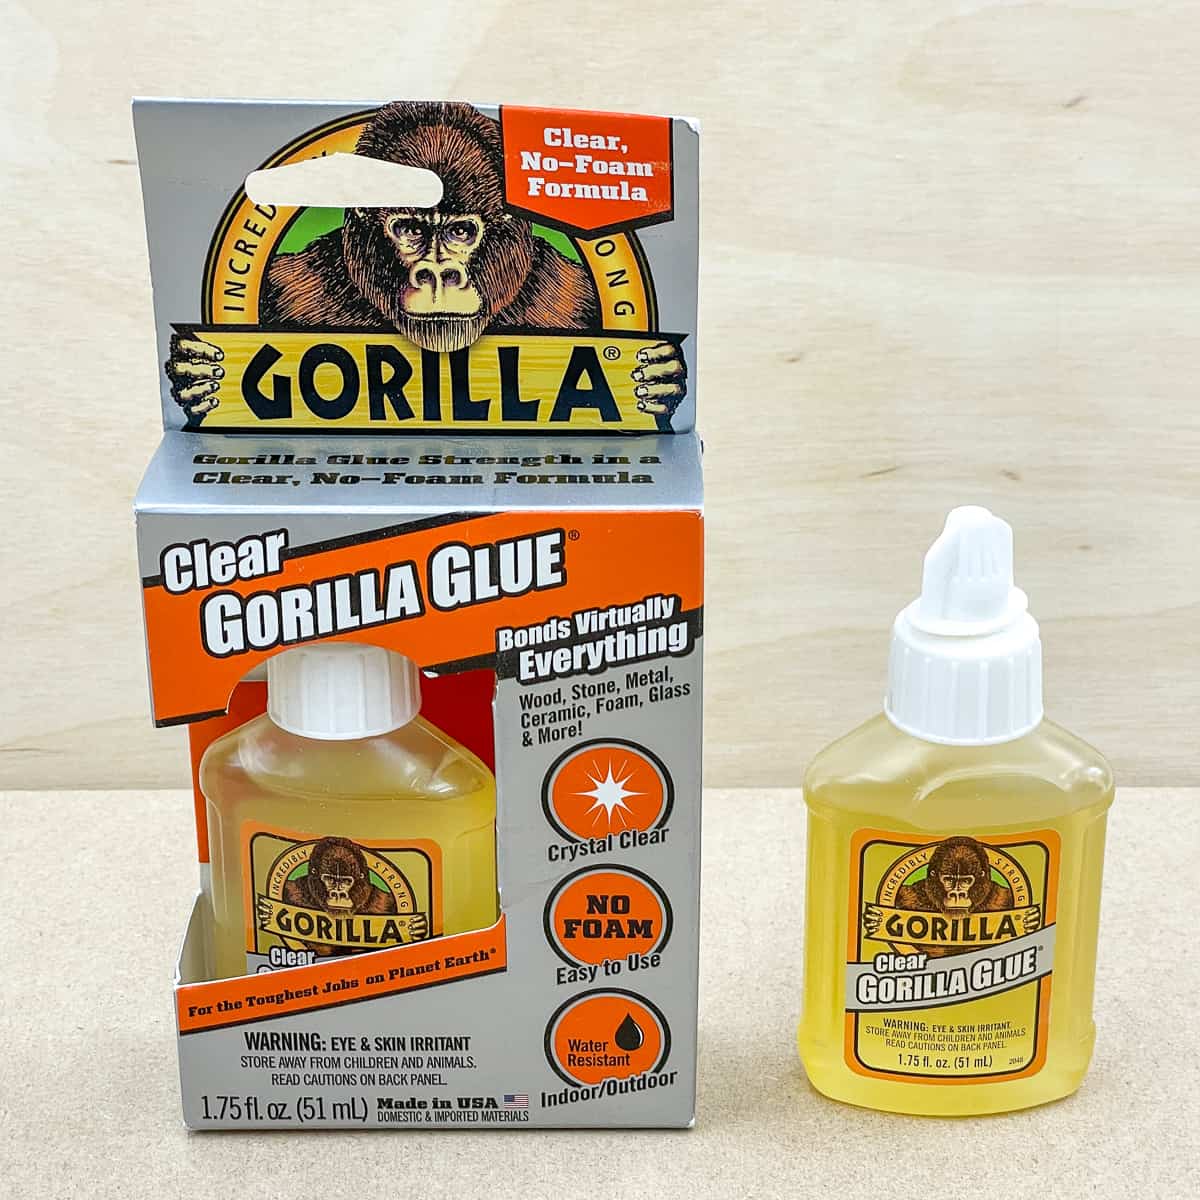 Choosing the Right Wood Glue